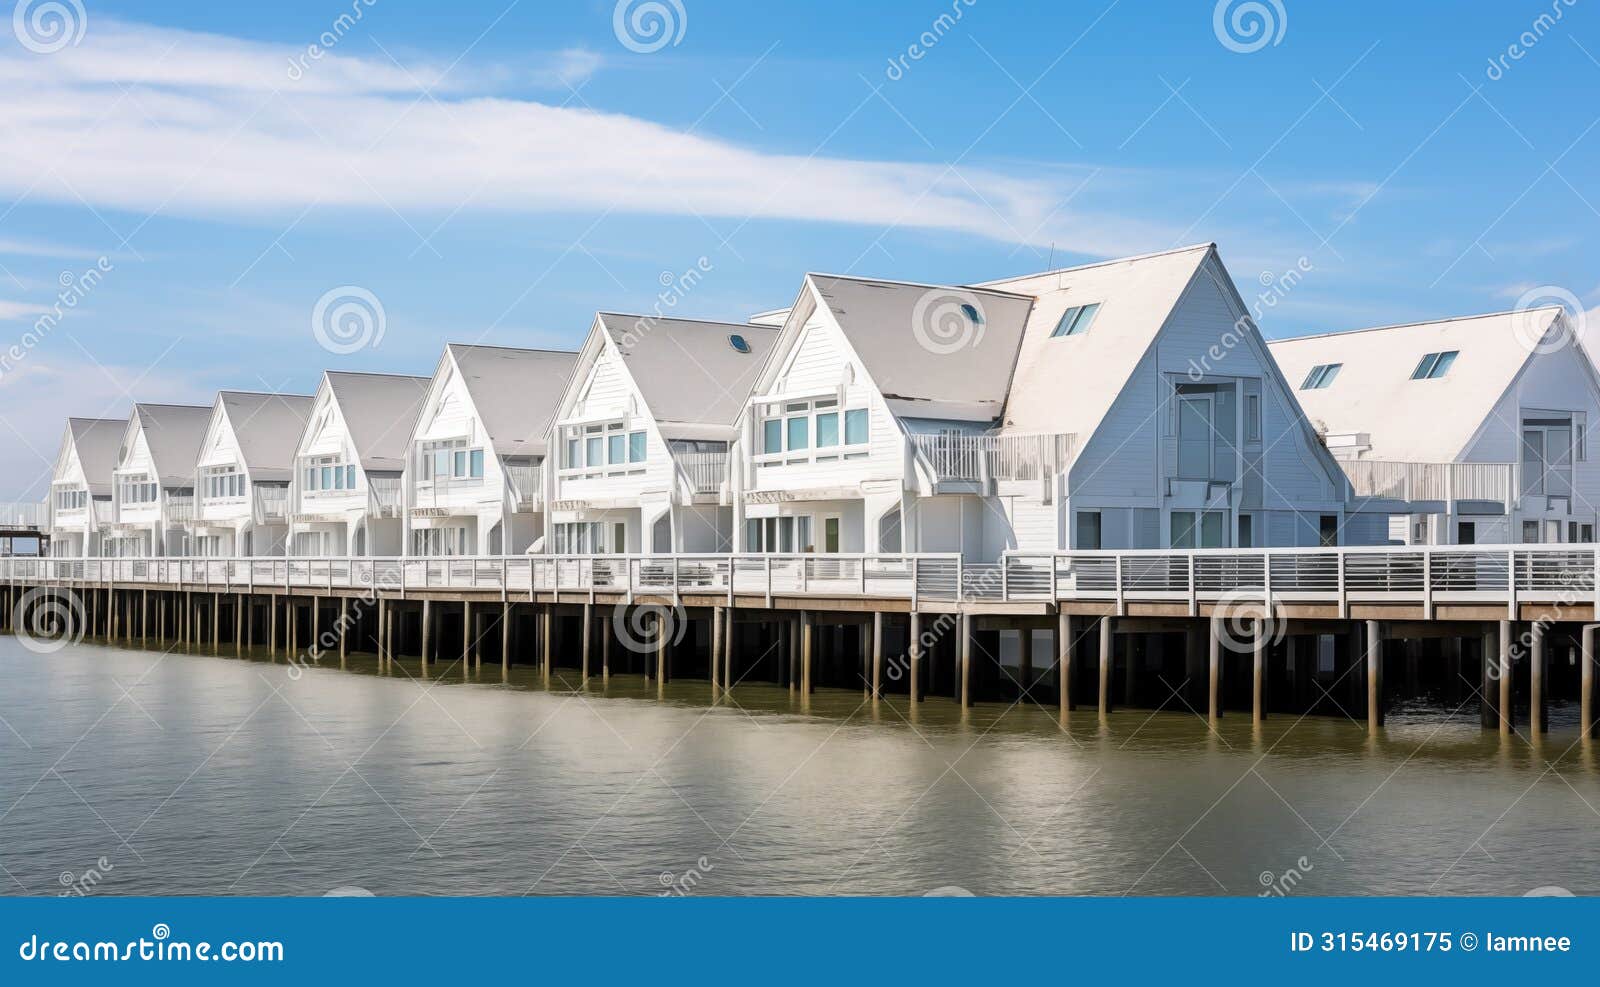 coastal architecture unique buildings blend with maritime surroundings.ai generated